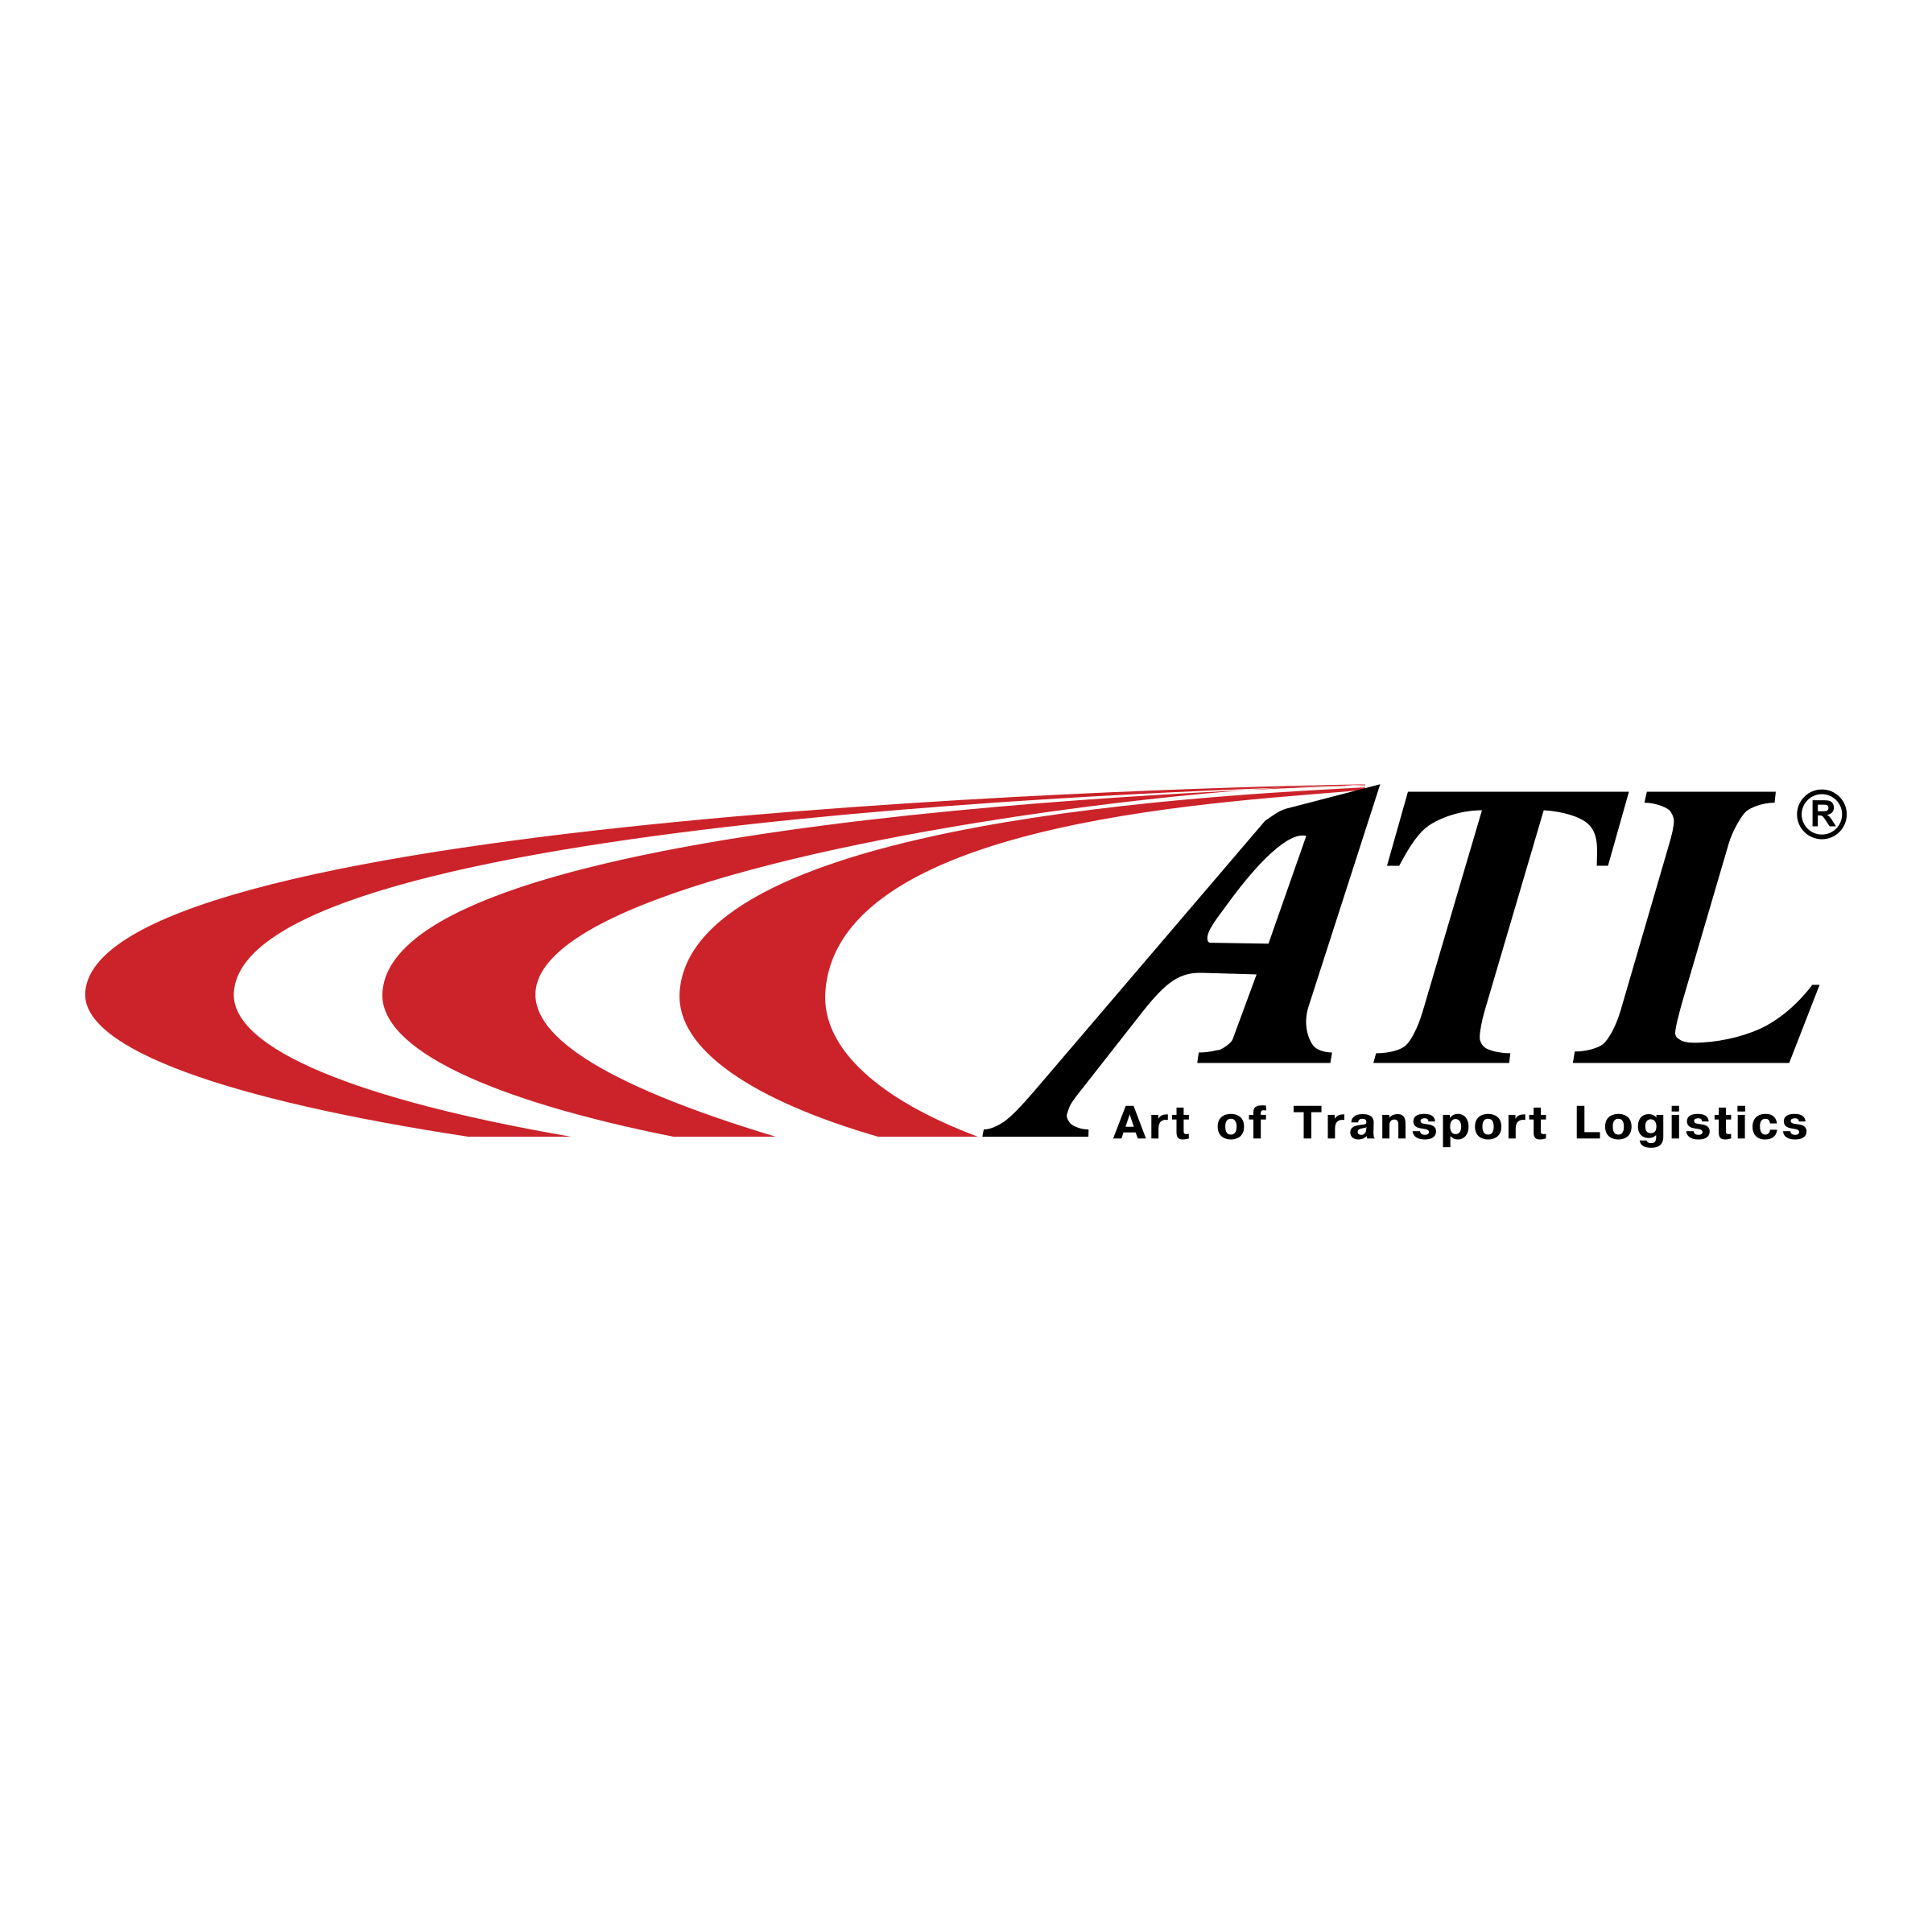 ATL Logo - ATL Logo PNG Transparent & SVG Vector - Freebie Supply